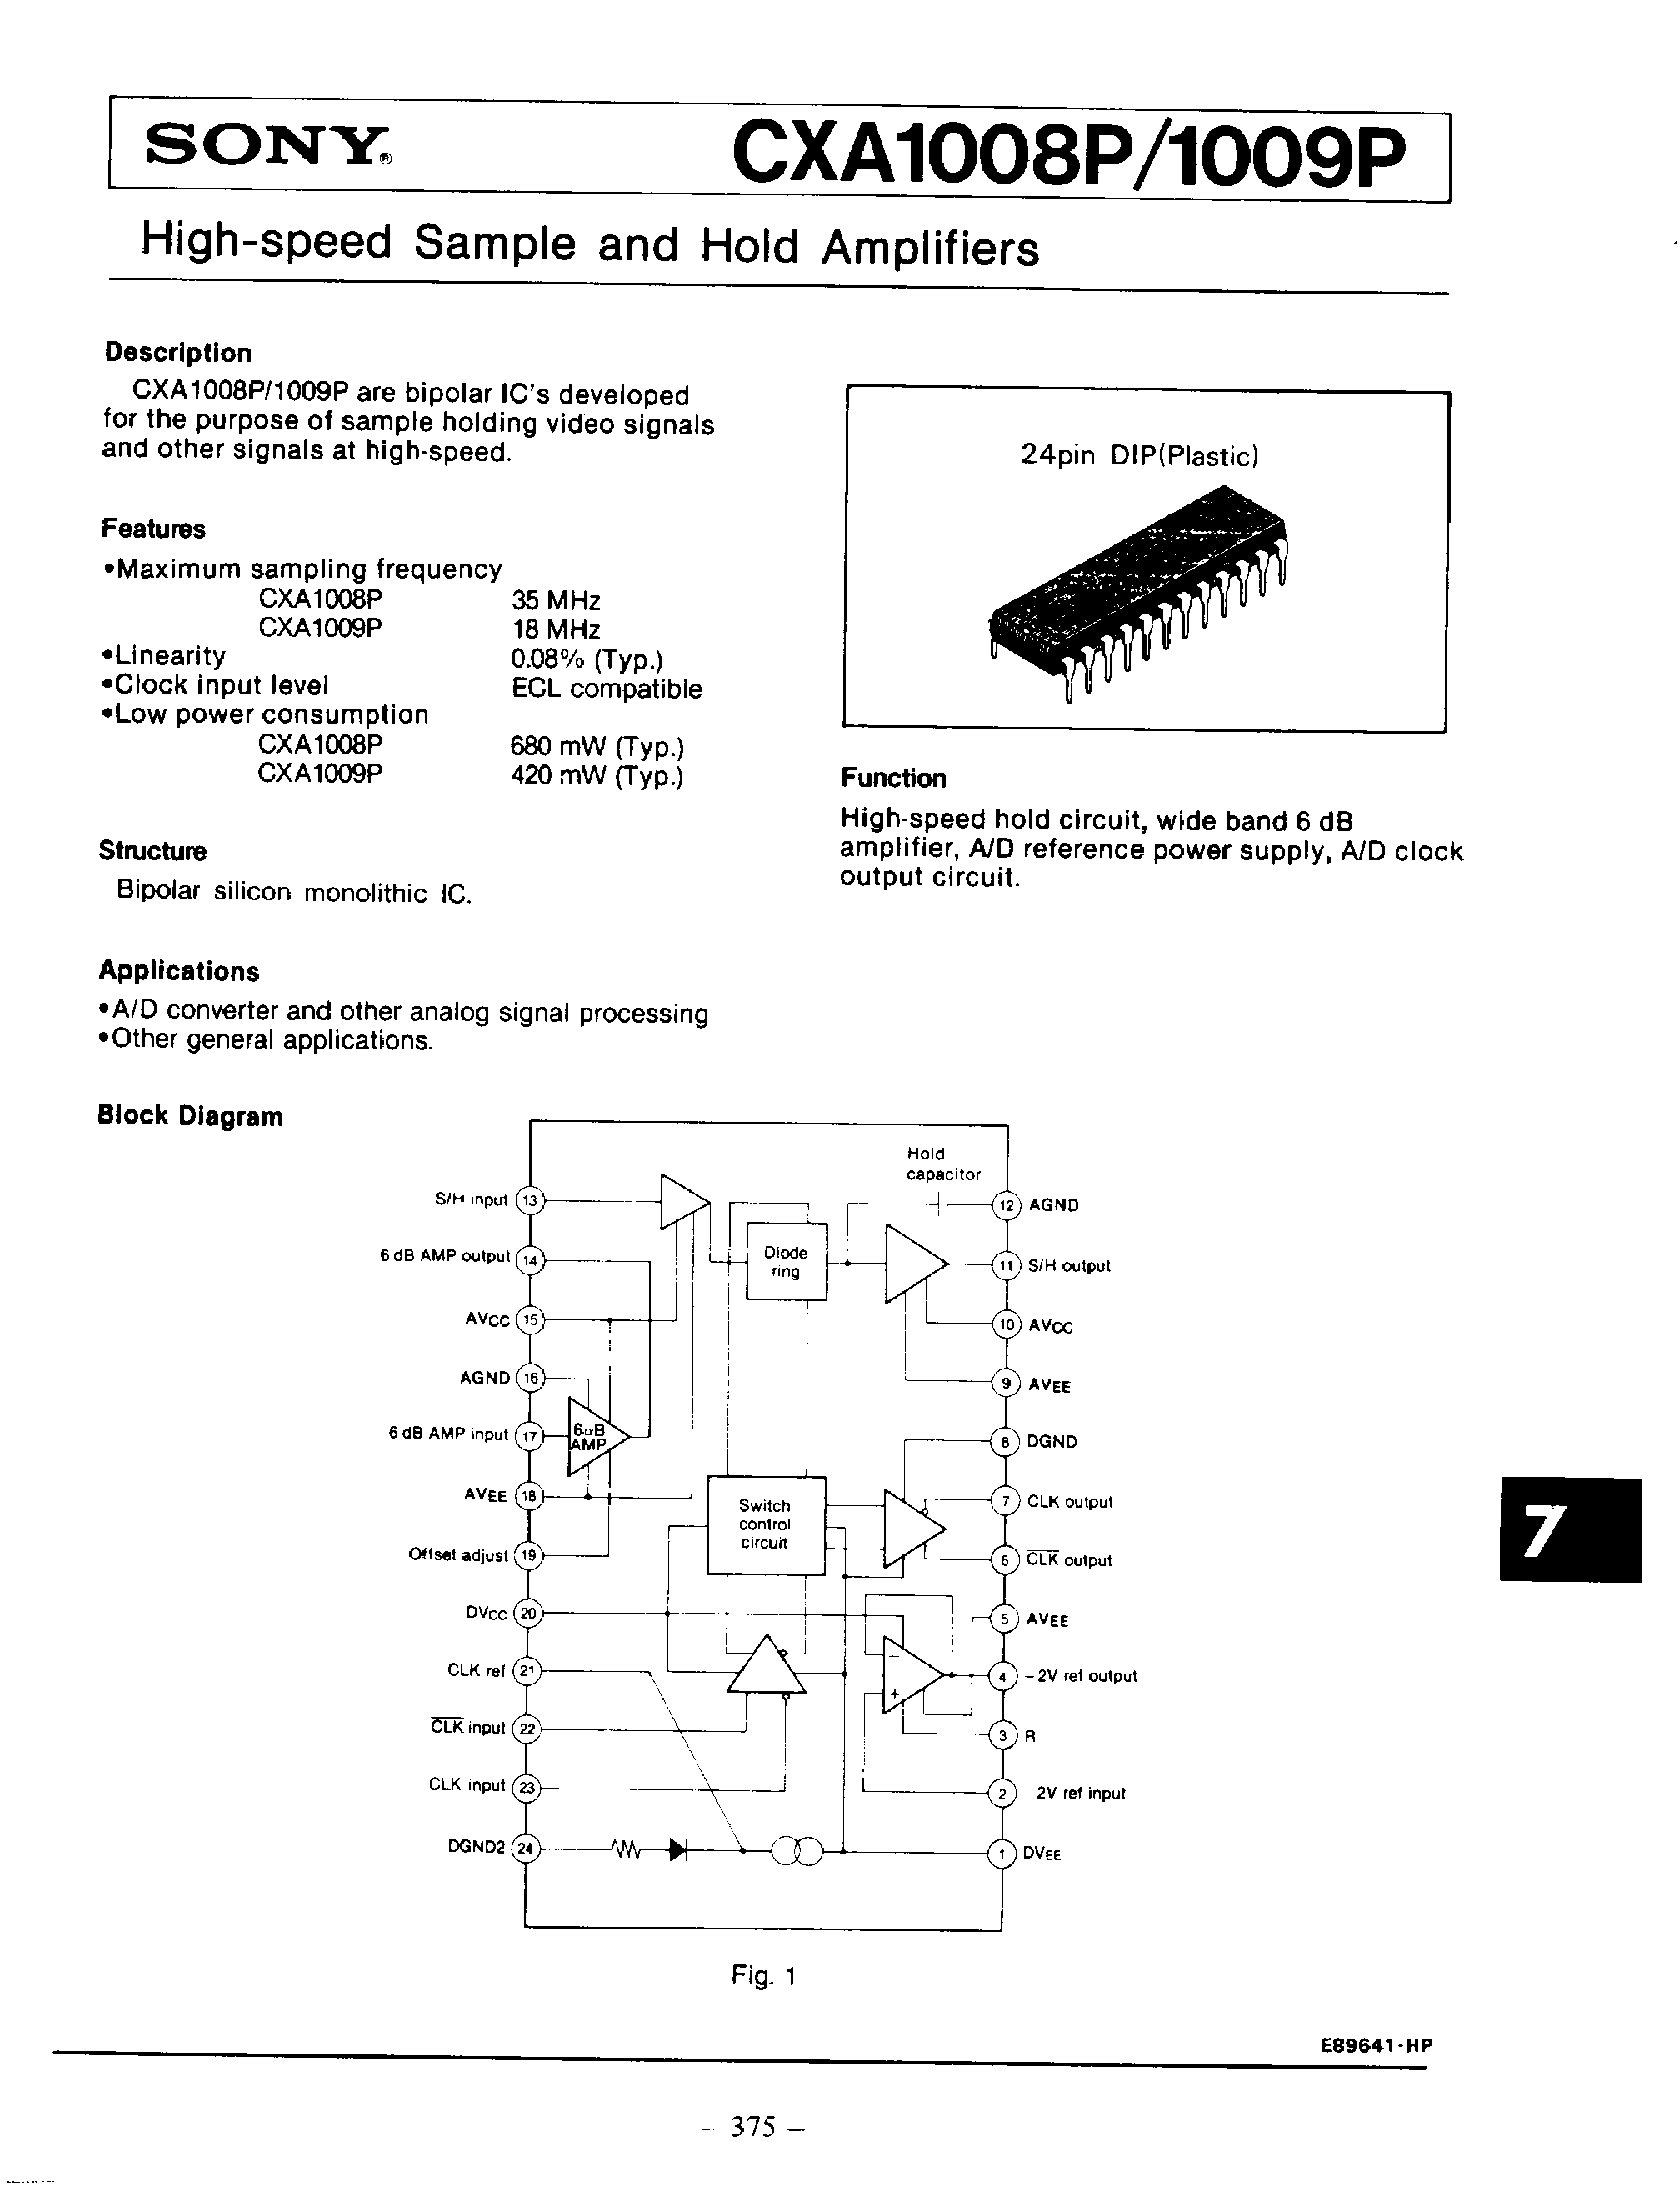 Datasheet CXA1008 - (CXA1008) High Speed Sample and Hold Amplifiers page 1